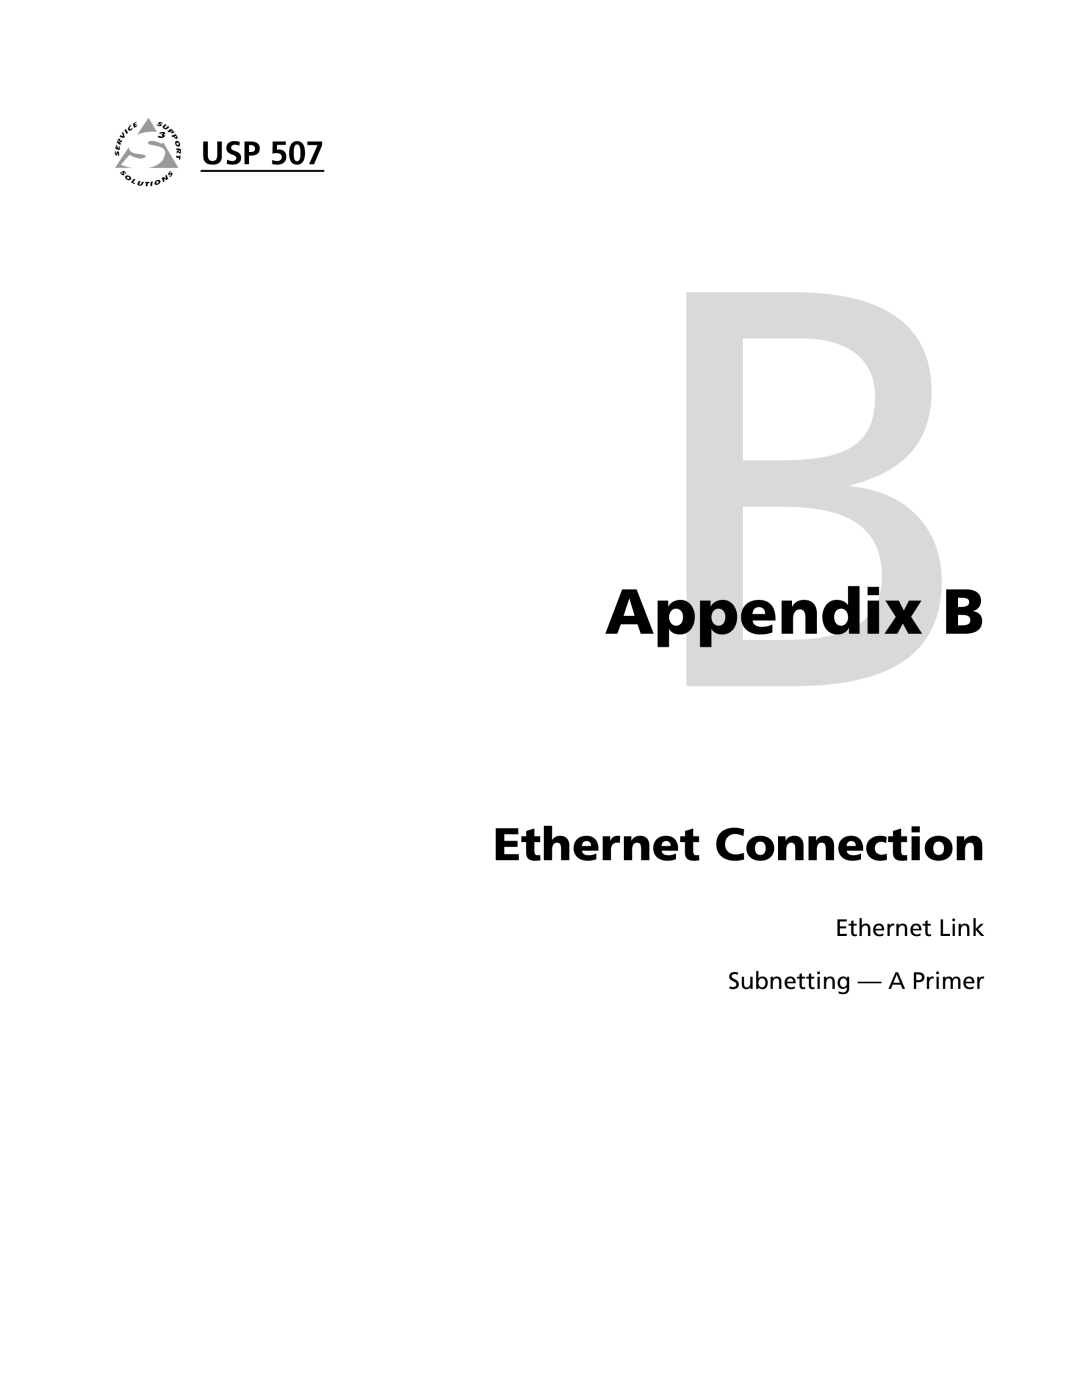 Extron electronic USP 507 manual AppendixBB, Ethernet Connection, Ethernet Link Subnetting — A Primer 